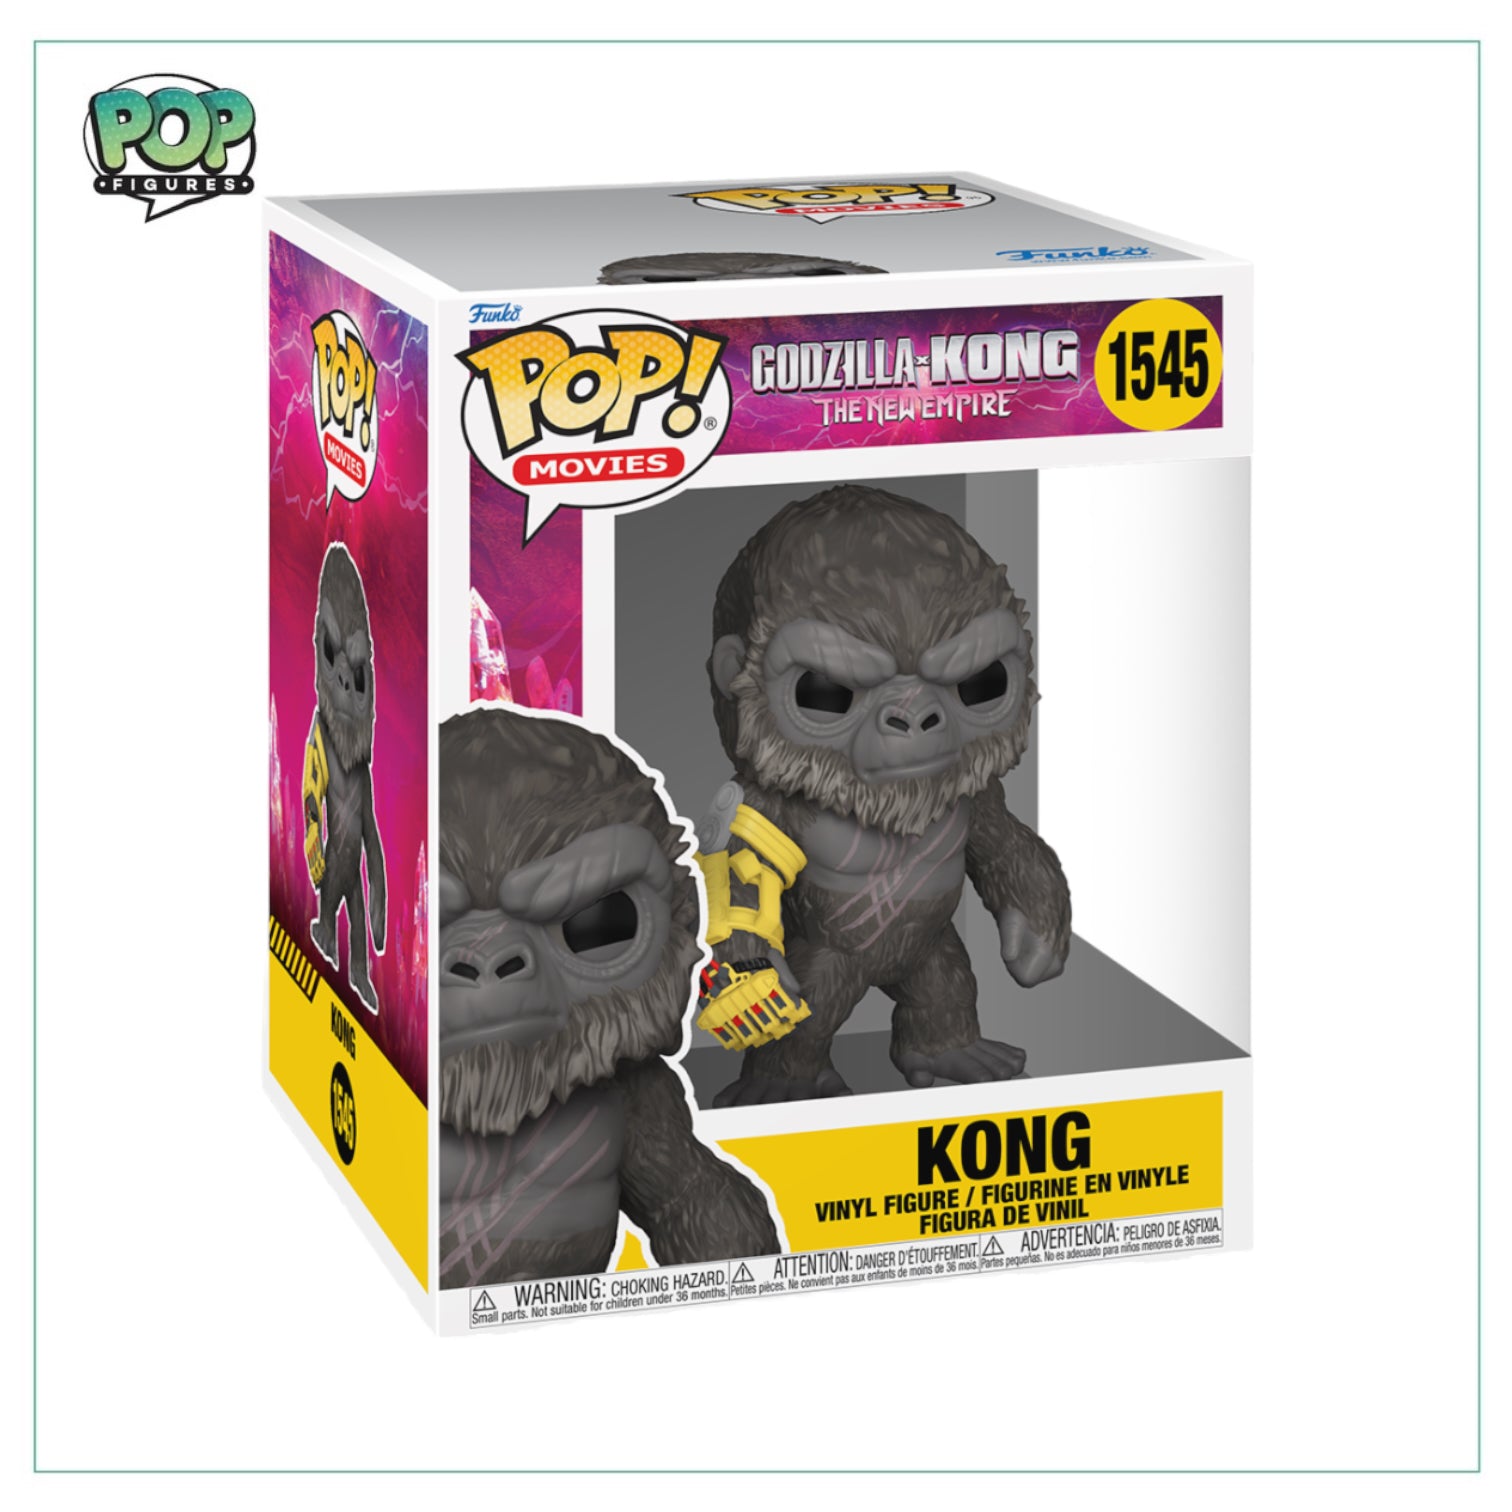 King Kong #1545 Funko Pop! Super Godzilla VS King Kong: The New Empire